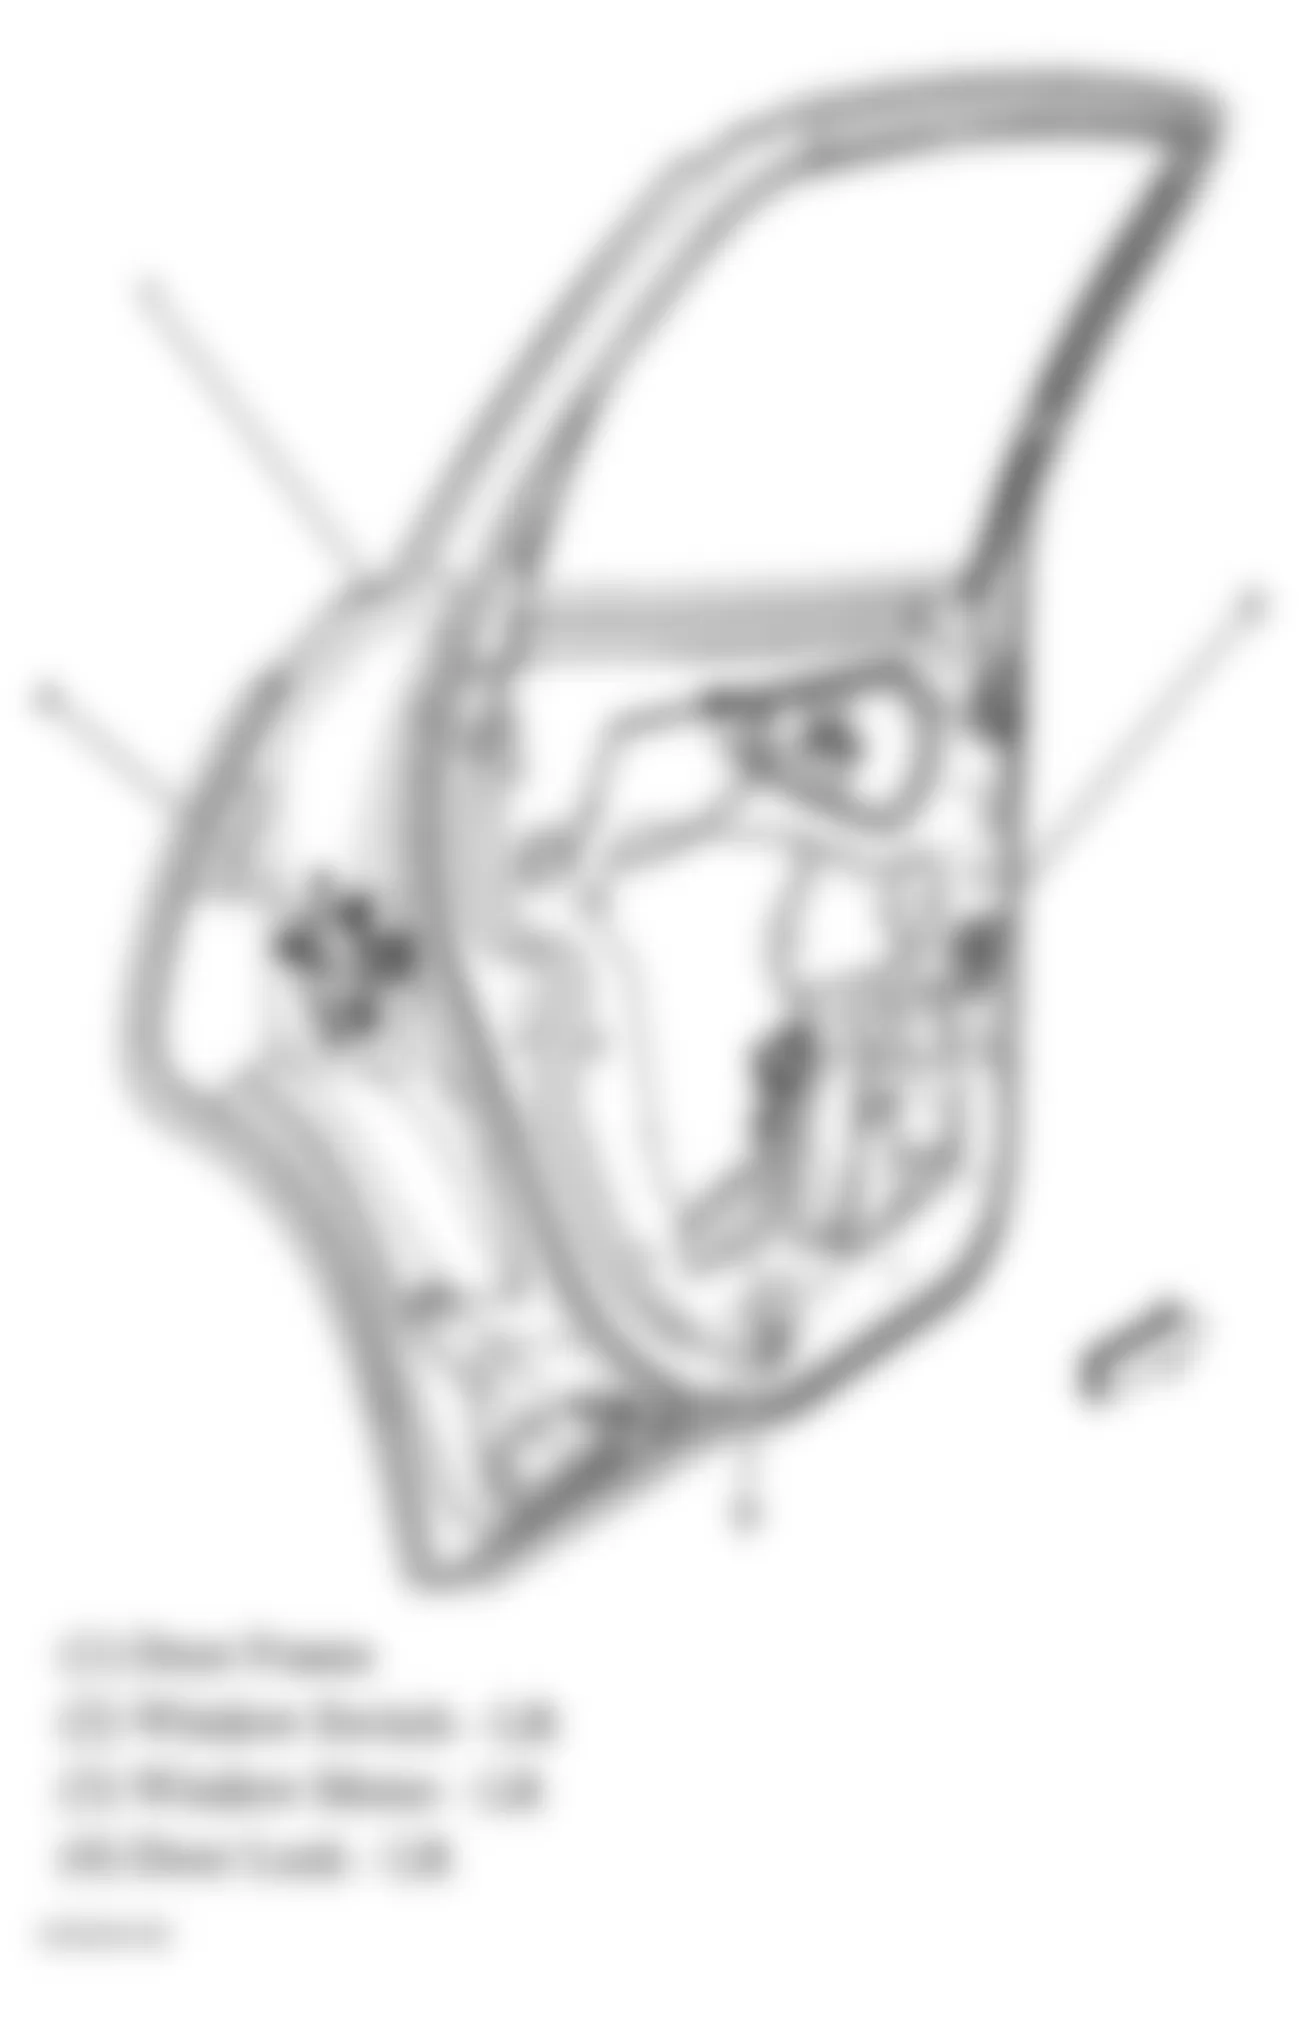 Buick Allure CX 2006 - Component Locations -  Left Rear Door